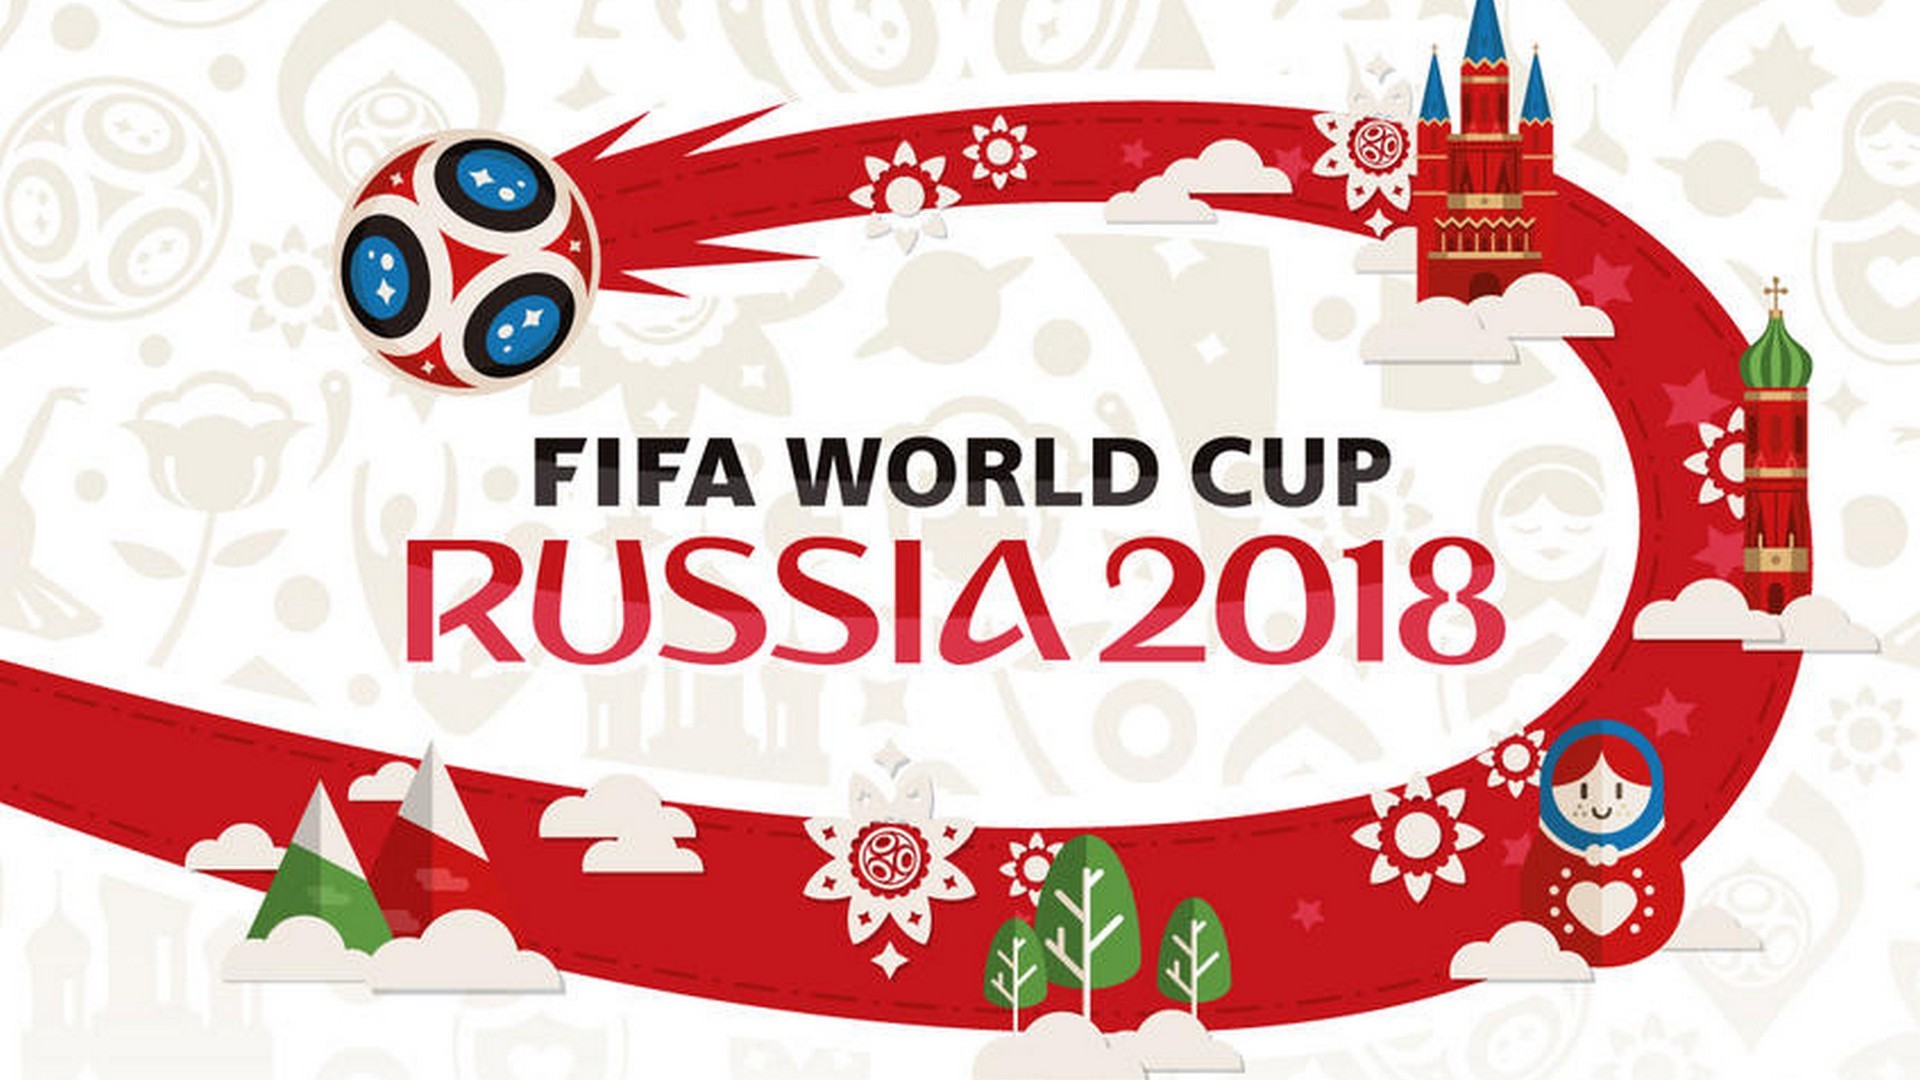 FIFA World Cup Russia 2018 006 Mistrzostwa Swiata w PiLce Noznej Rosja 2018